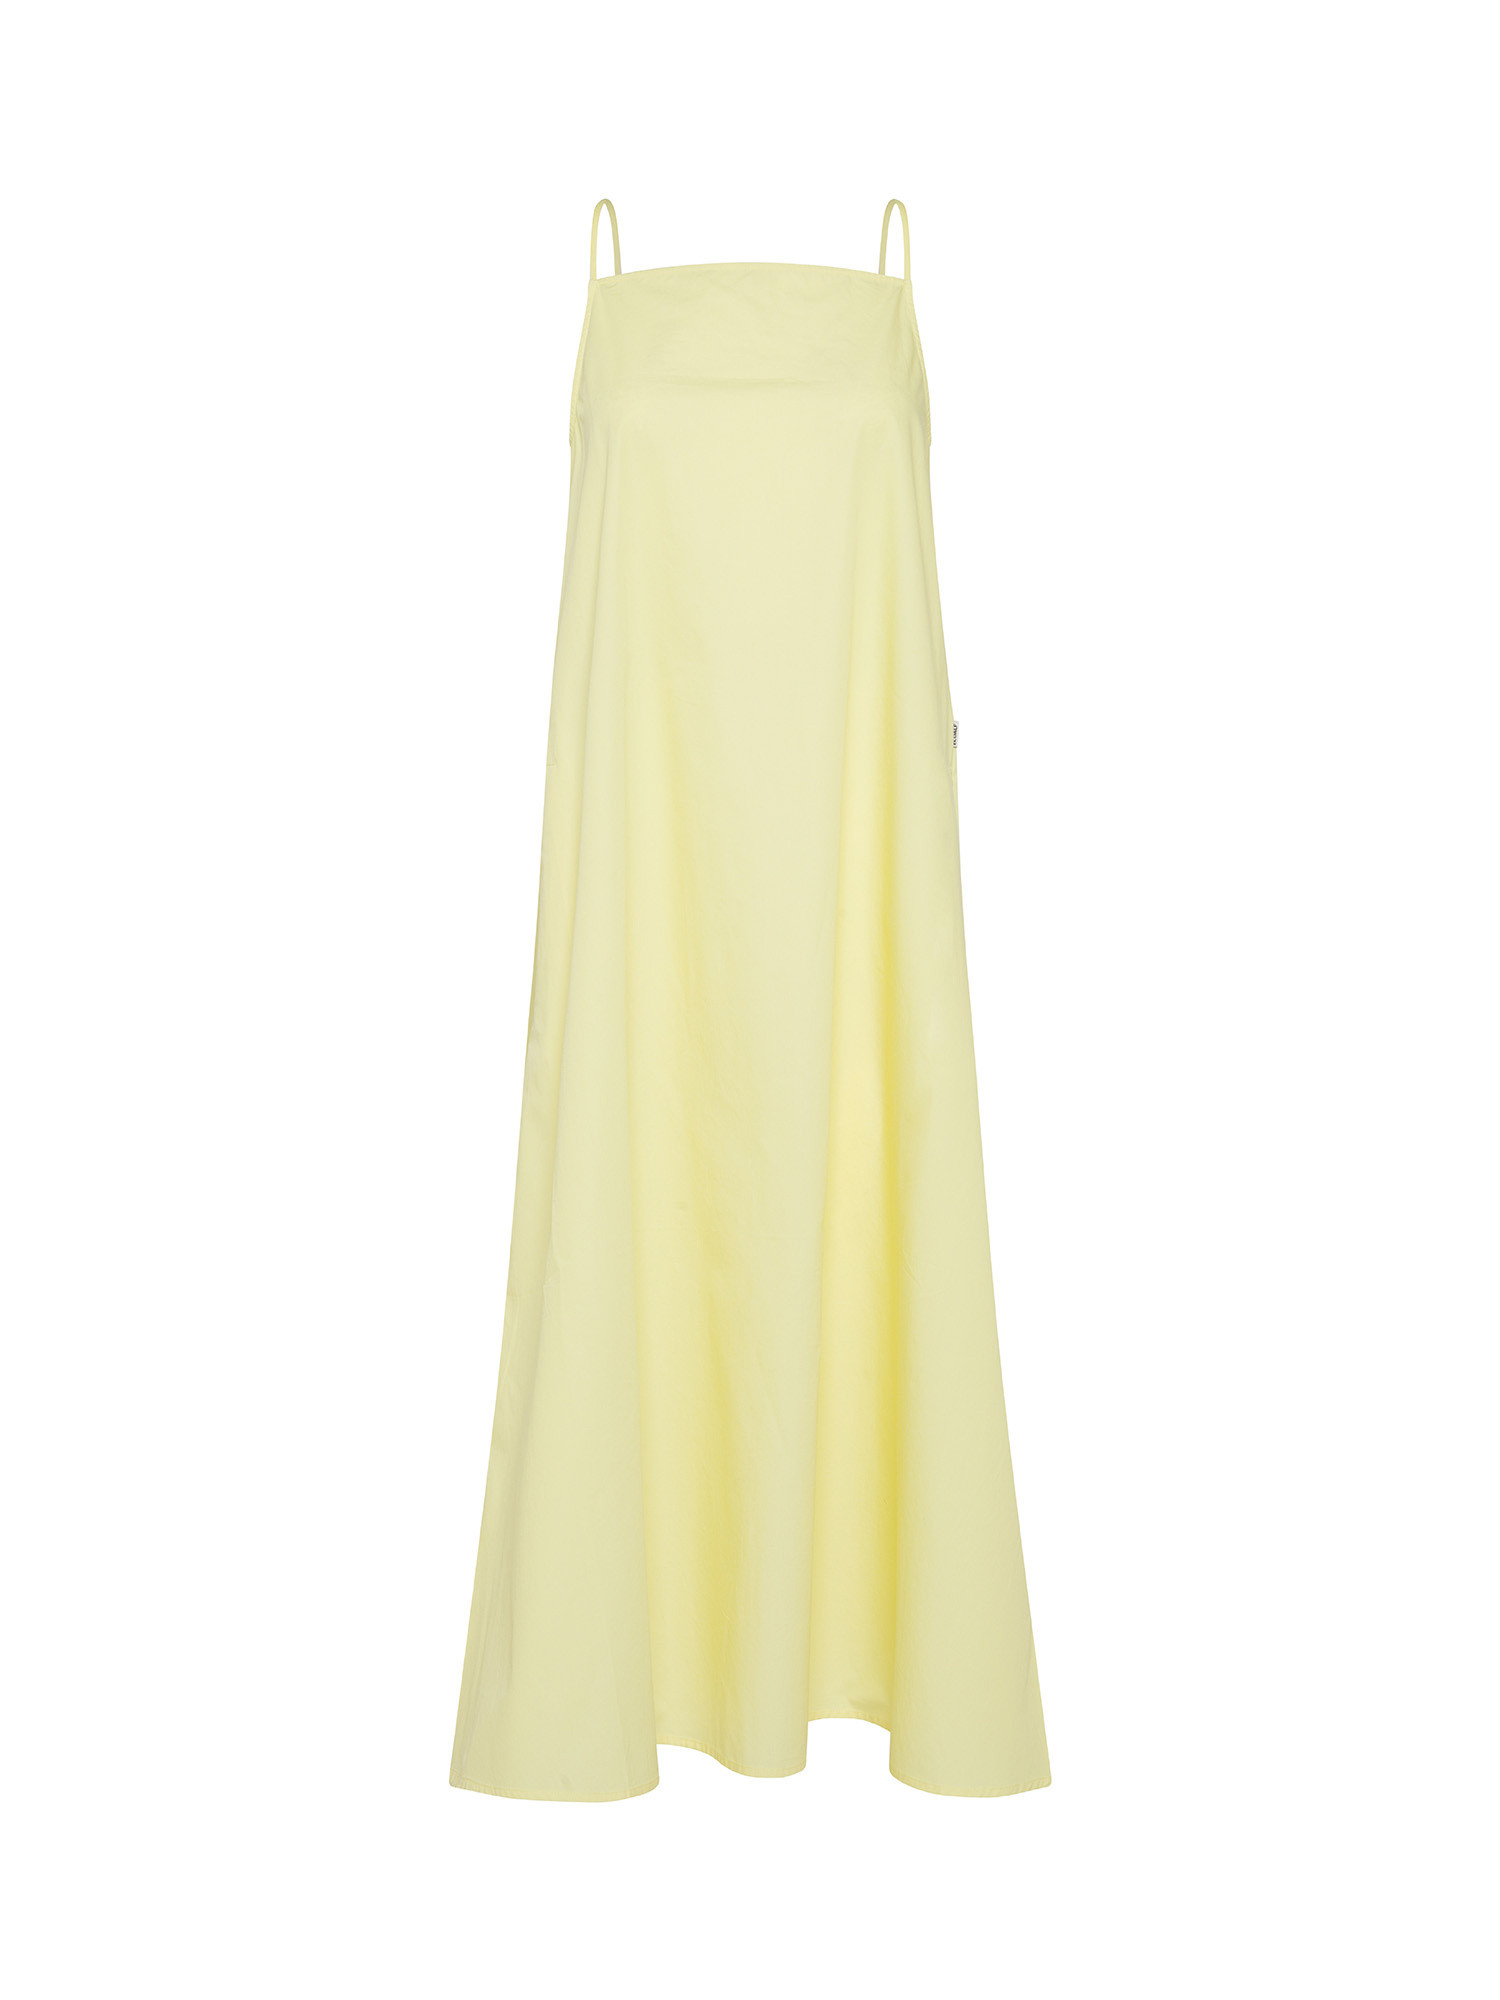 Ecoalf - Oversized Pearl dress, Yellow, large image number 0